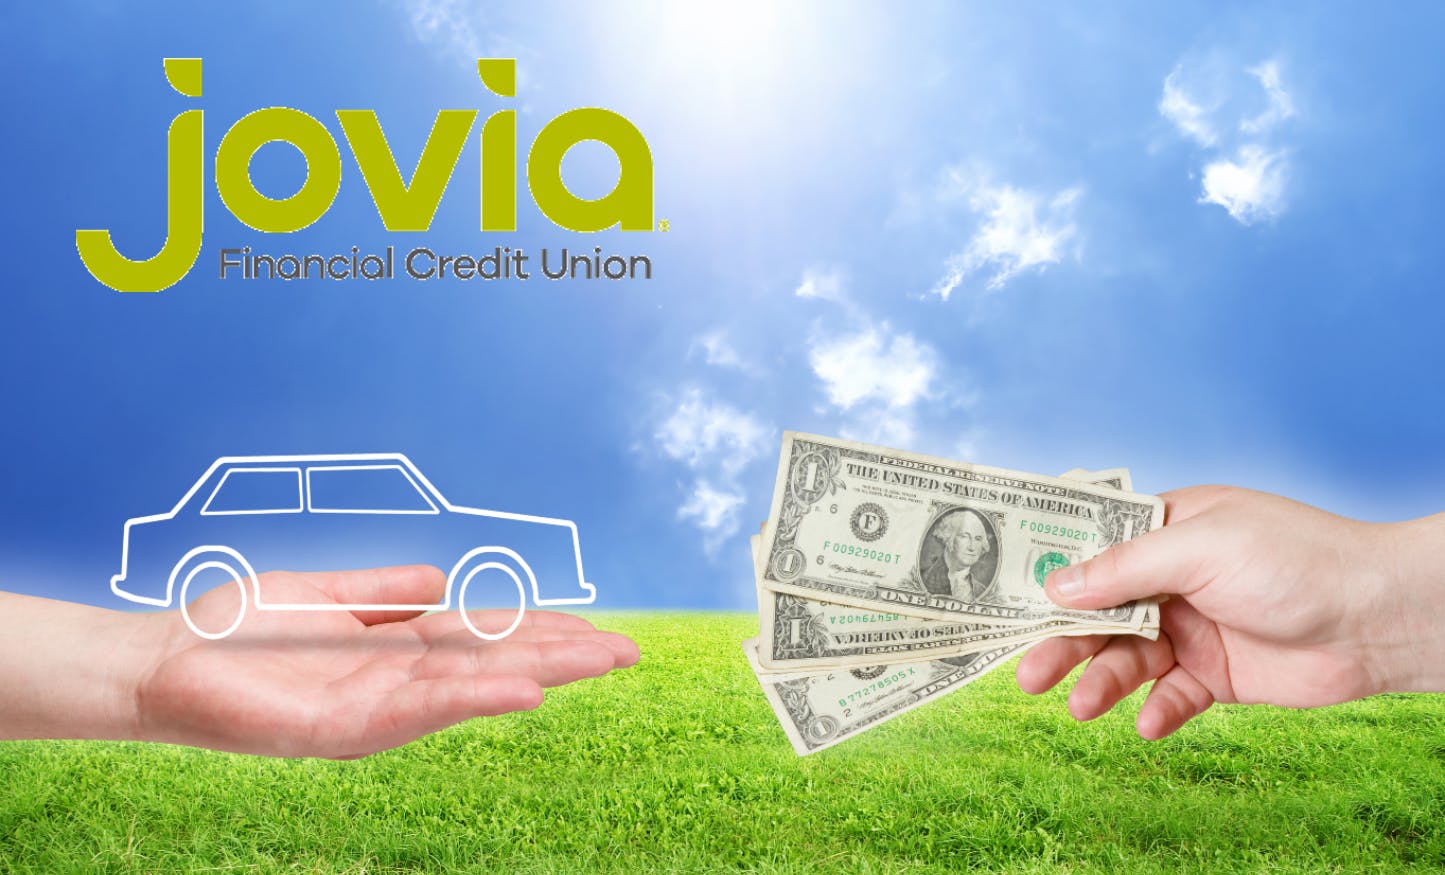 Jovia Financial Credit Union Auto Loans Review!